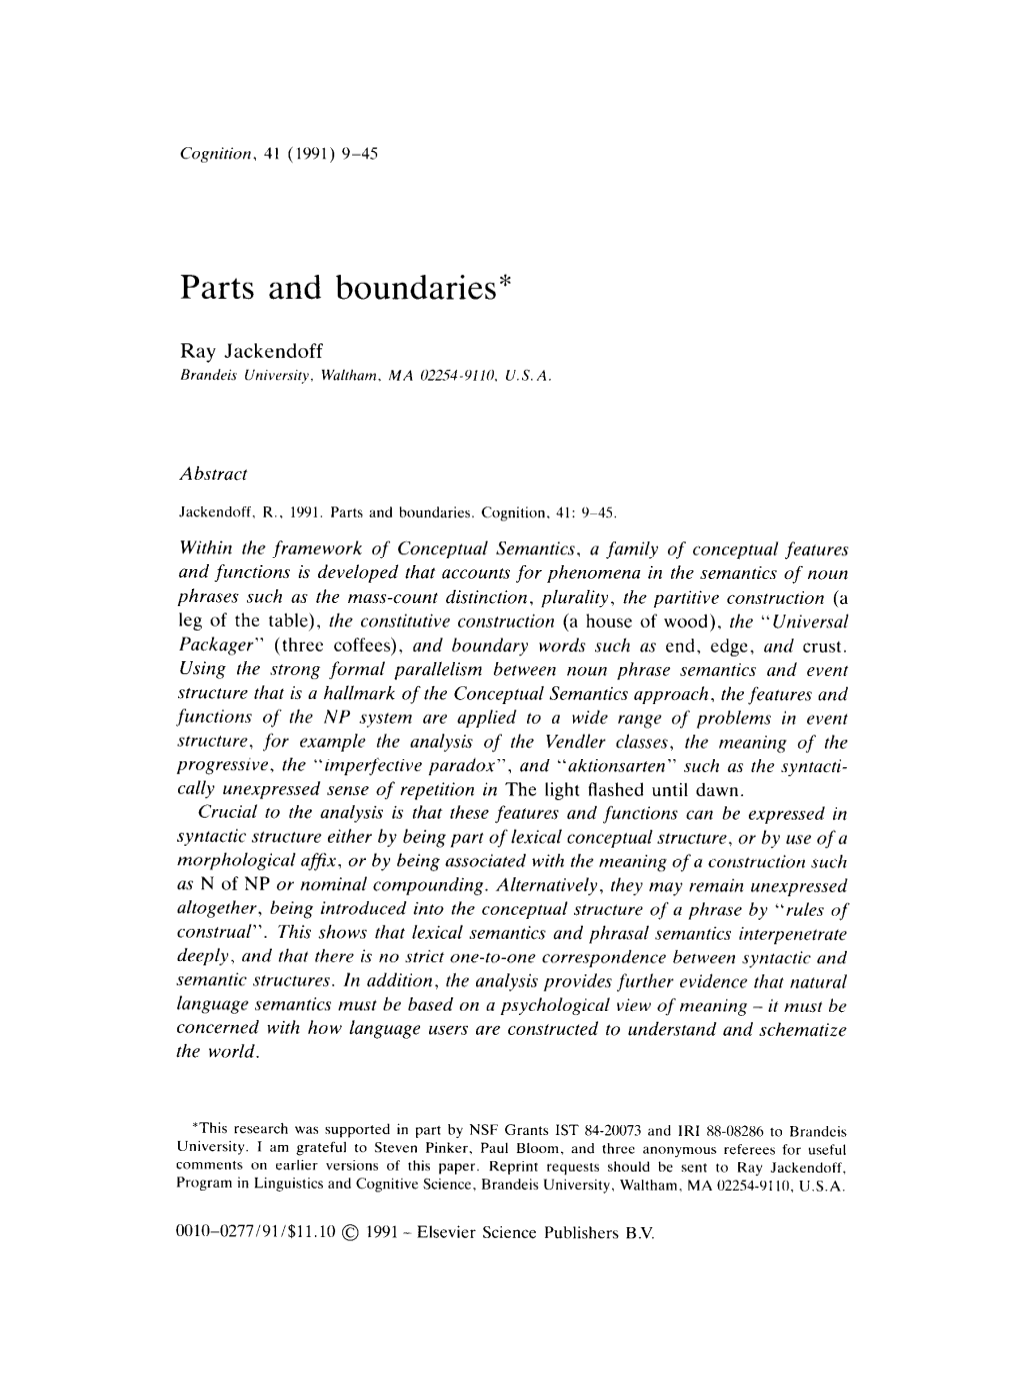 Parts and Boundaries*